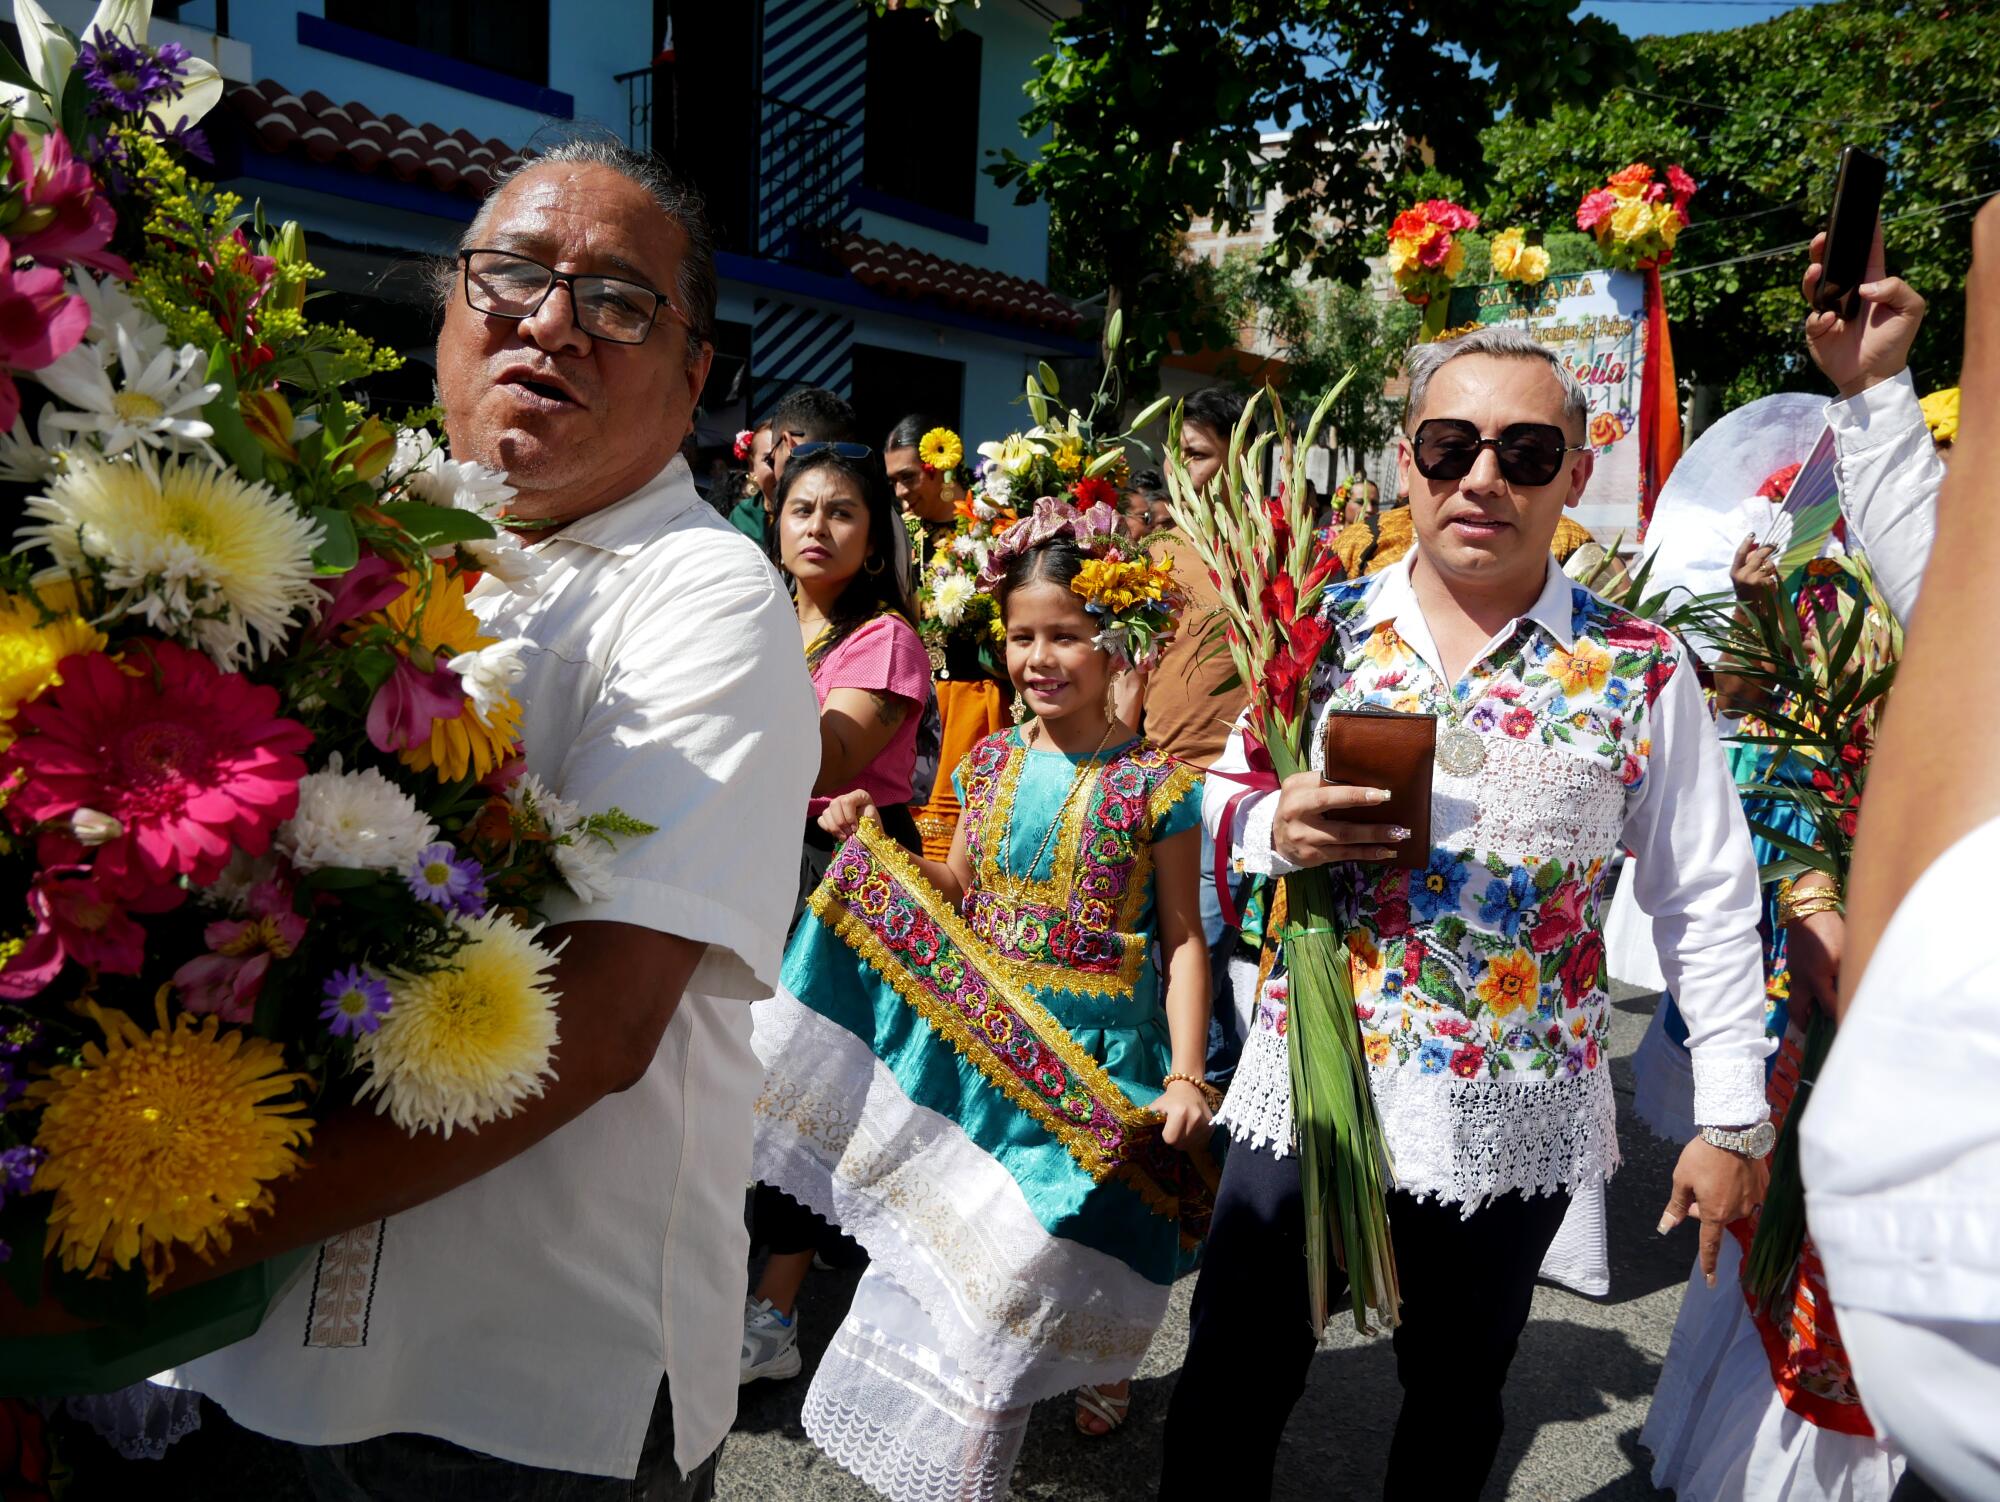 Multigenerational crowds of attendees carry flowers as tributes in Juchitan de Zaragoza, Oaxaca, Mexico on Nov. 18.